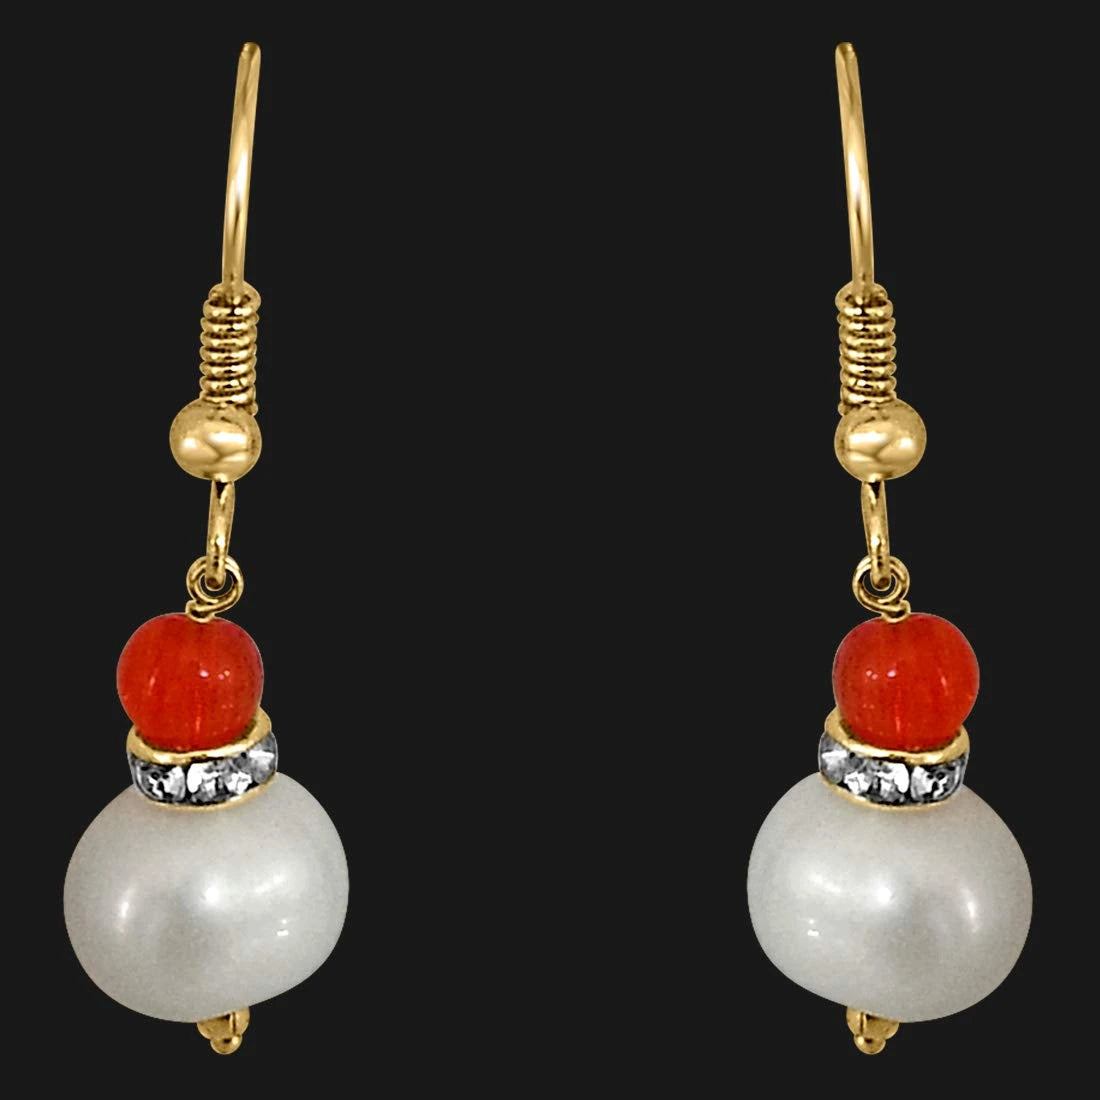 Real Big Pearl & Orange Stone Earrings for Women